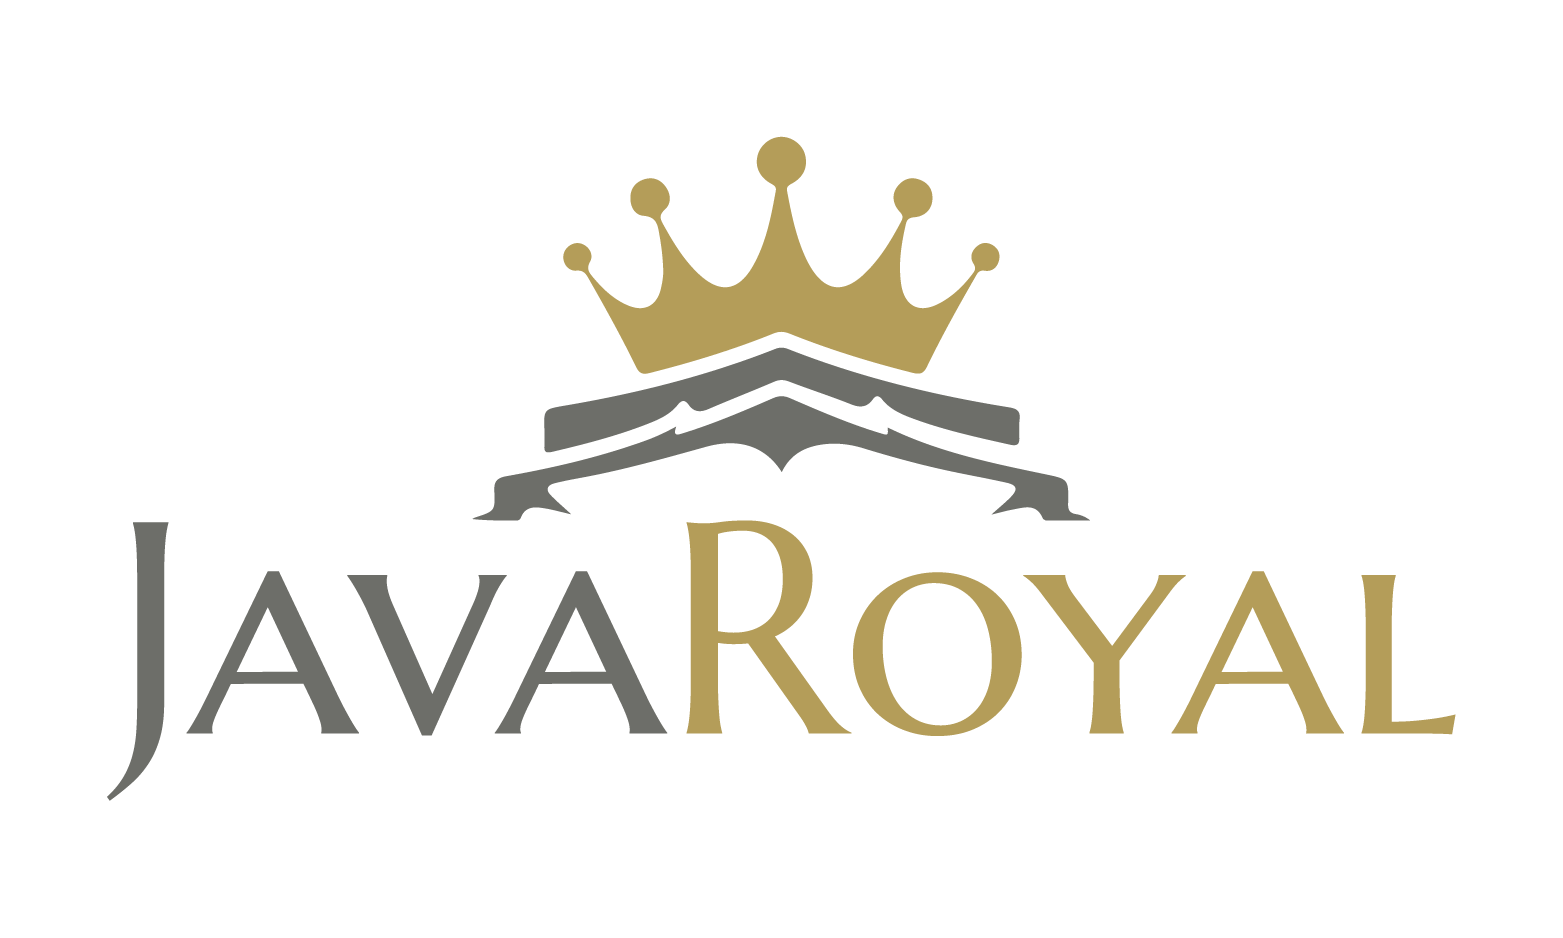 JavaRoyal.com - Creative brandable domain for sale